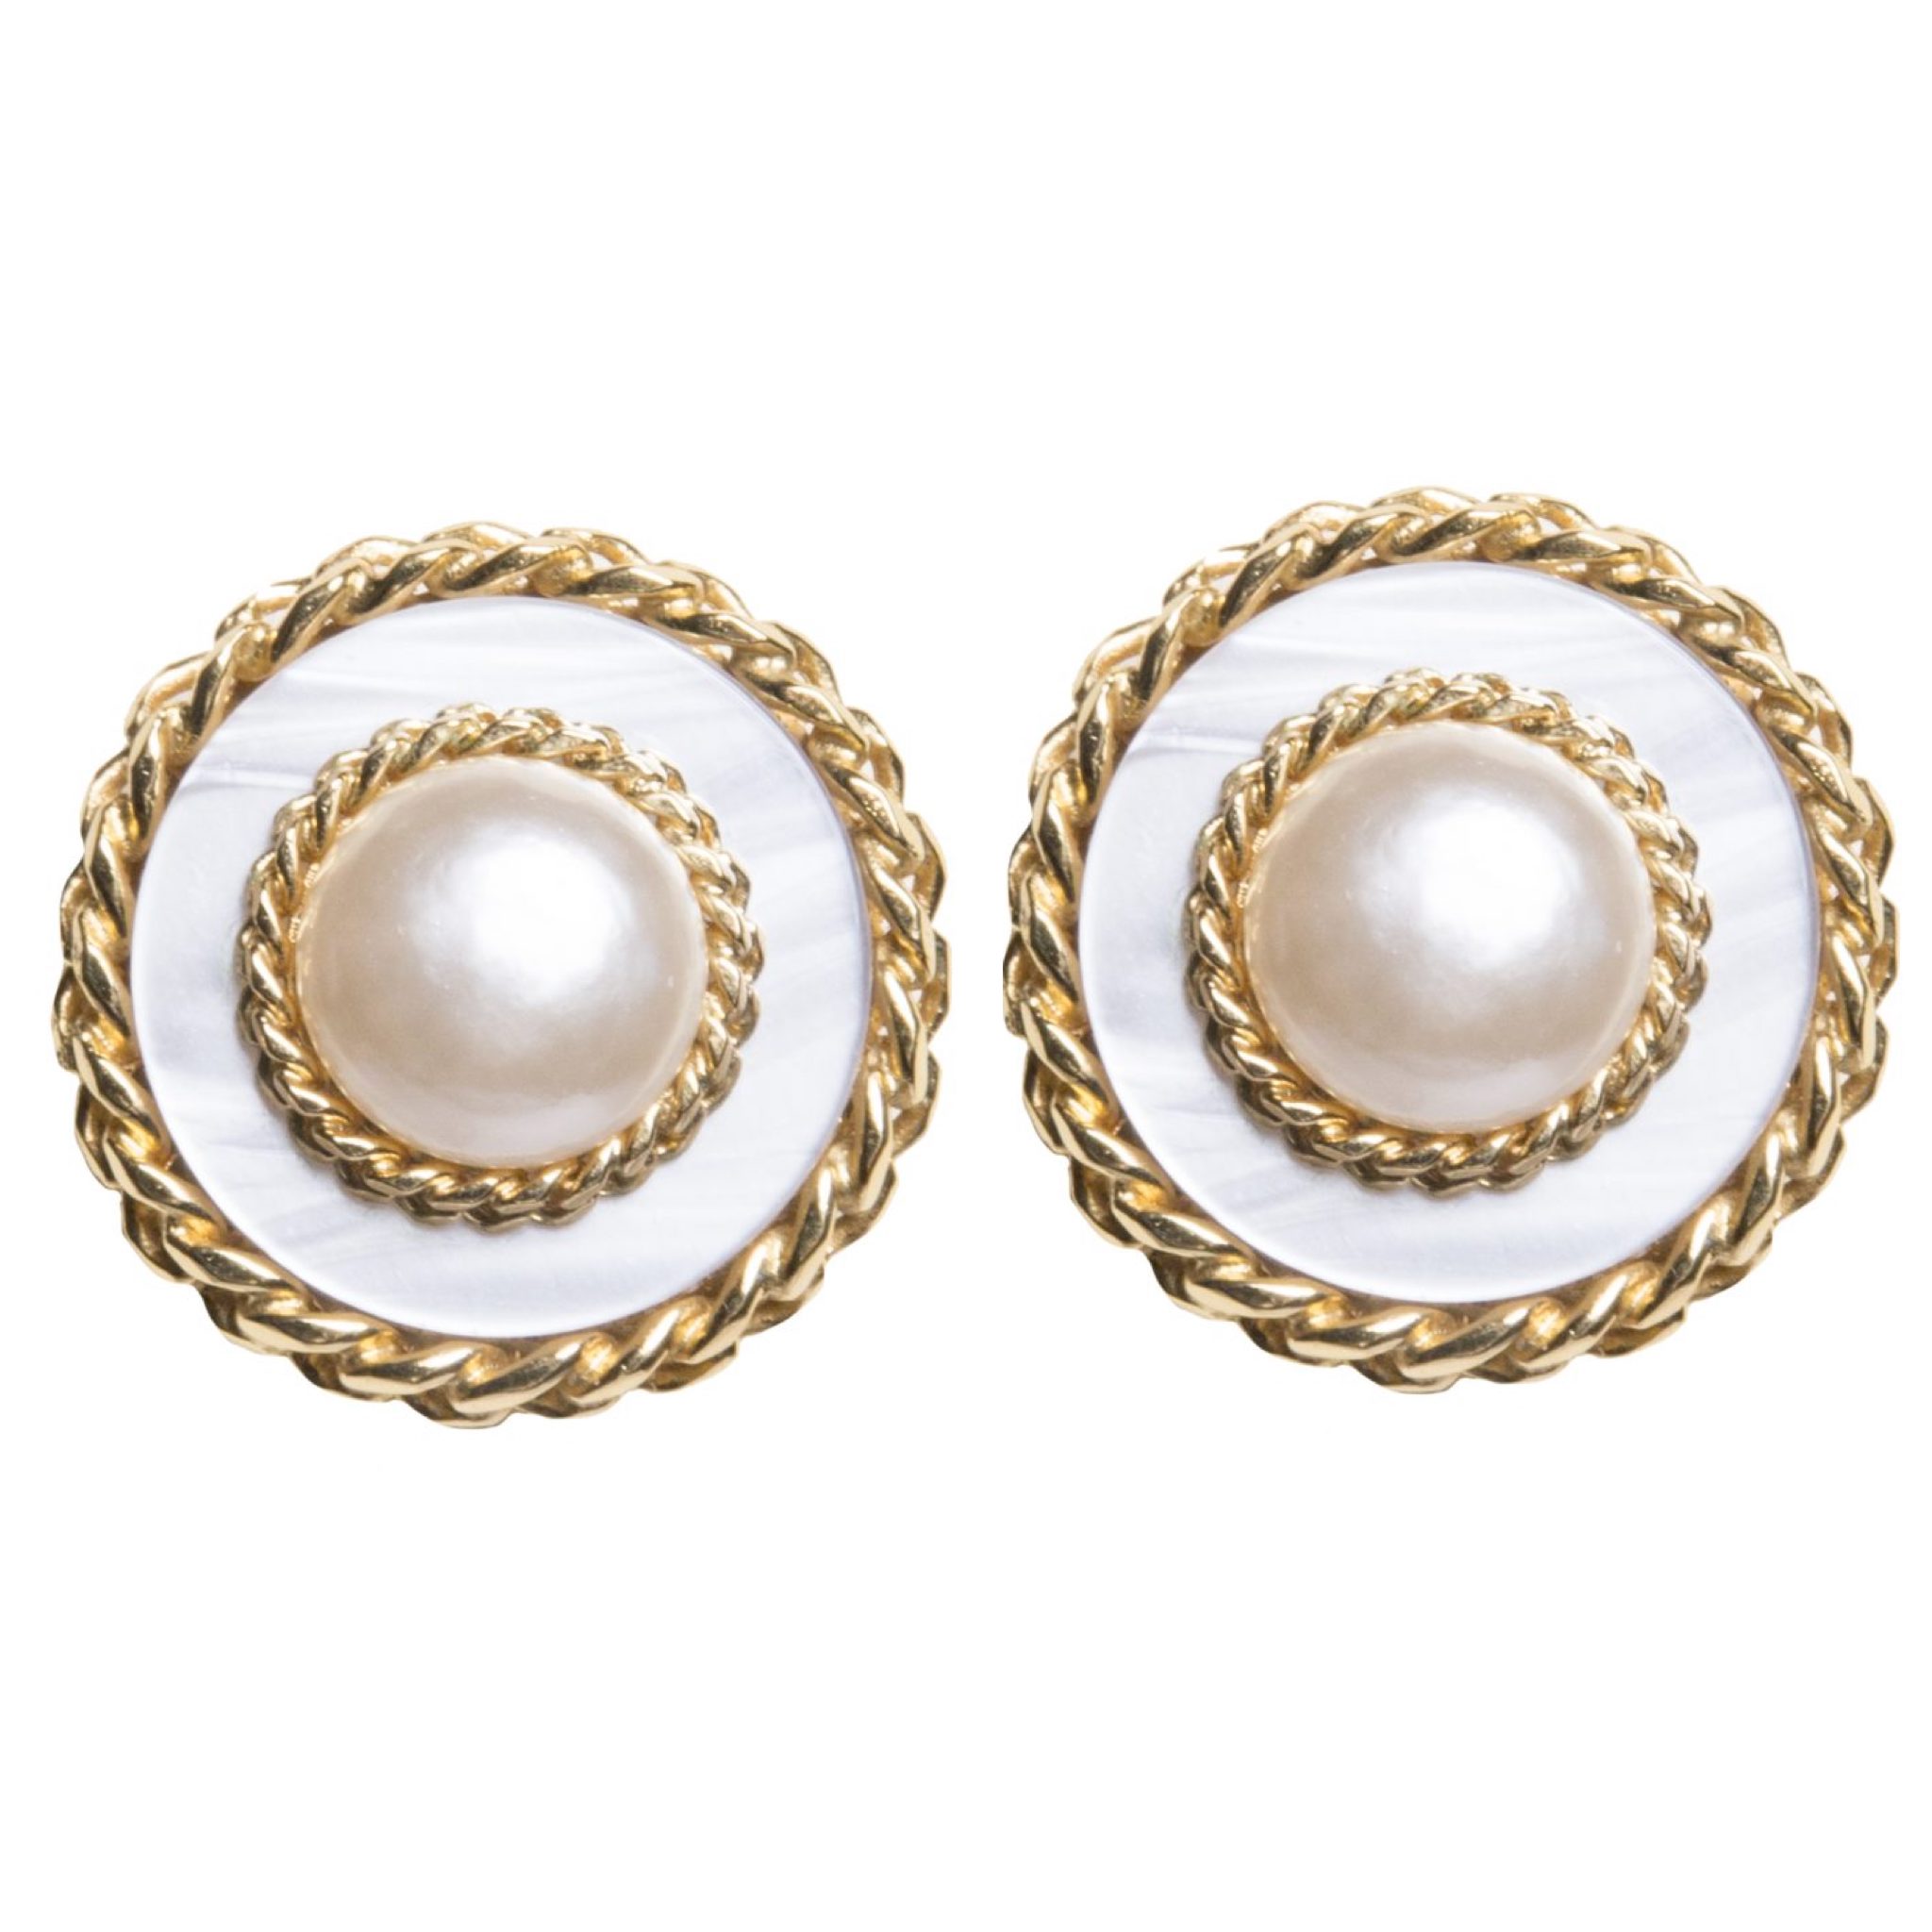 Vintage mother of pearl round earrings